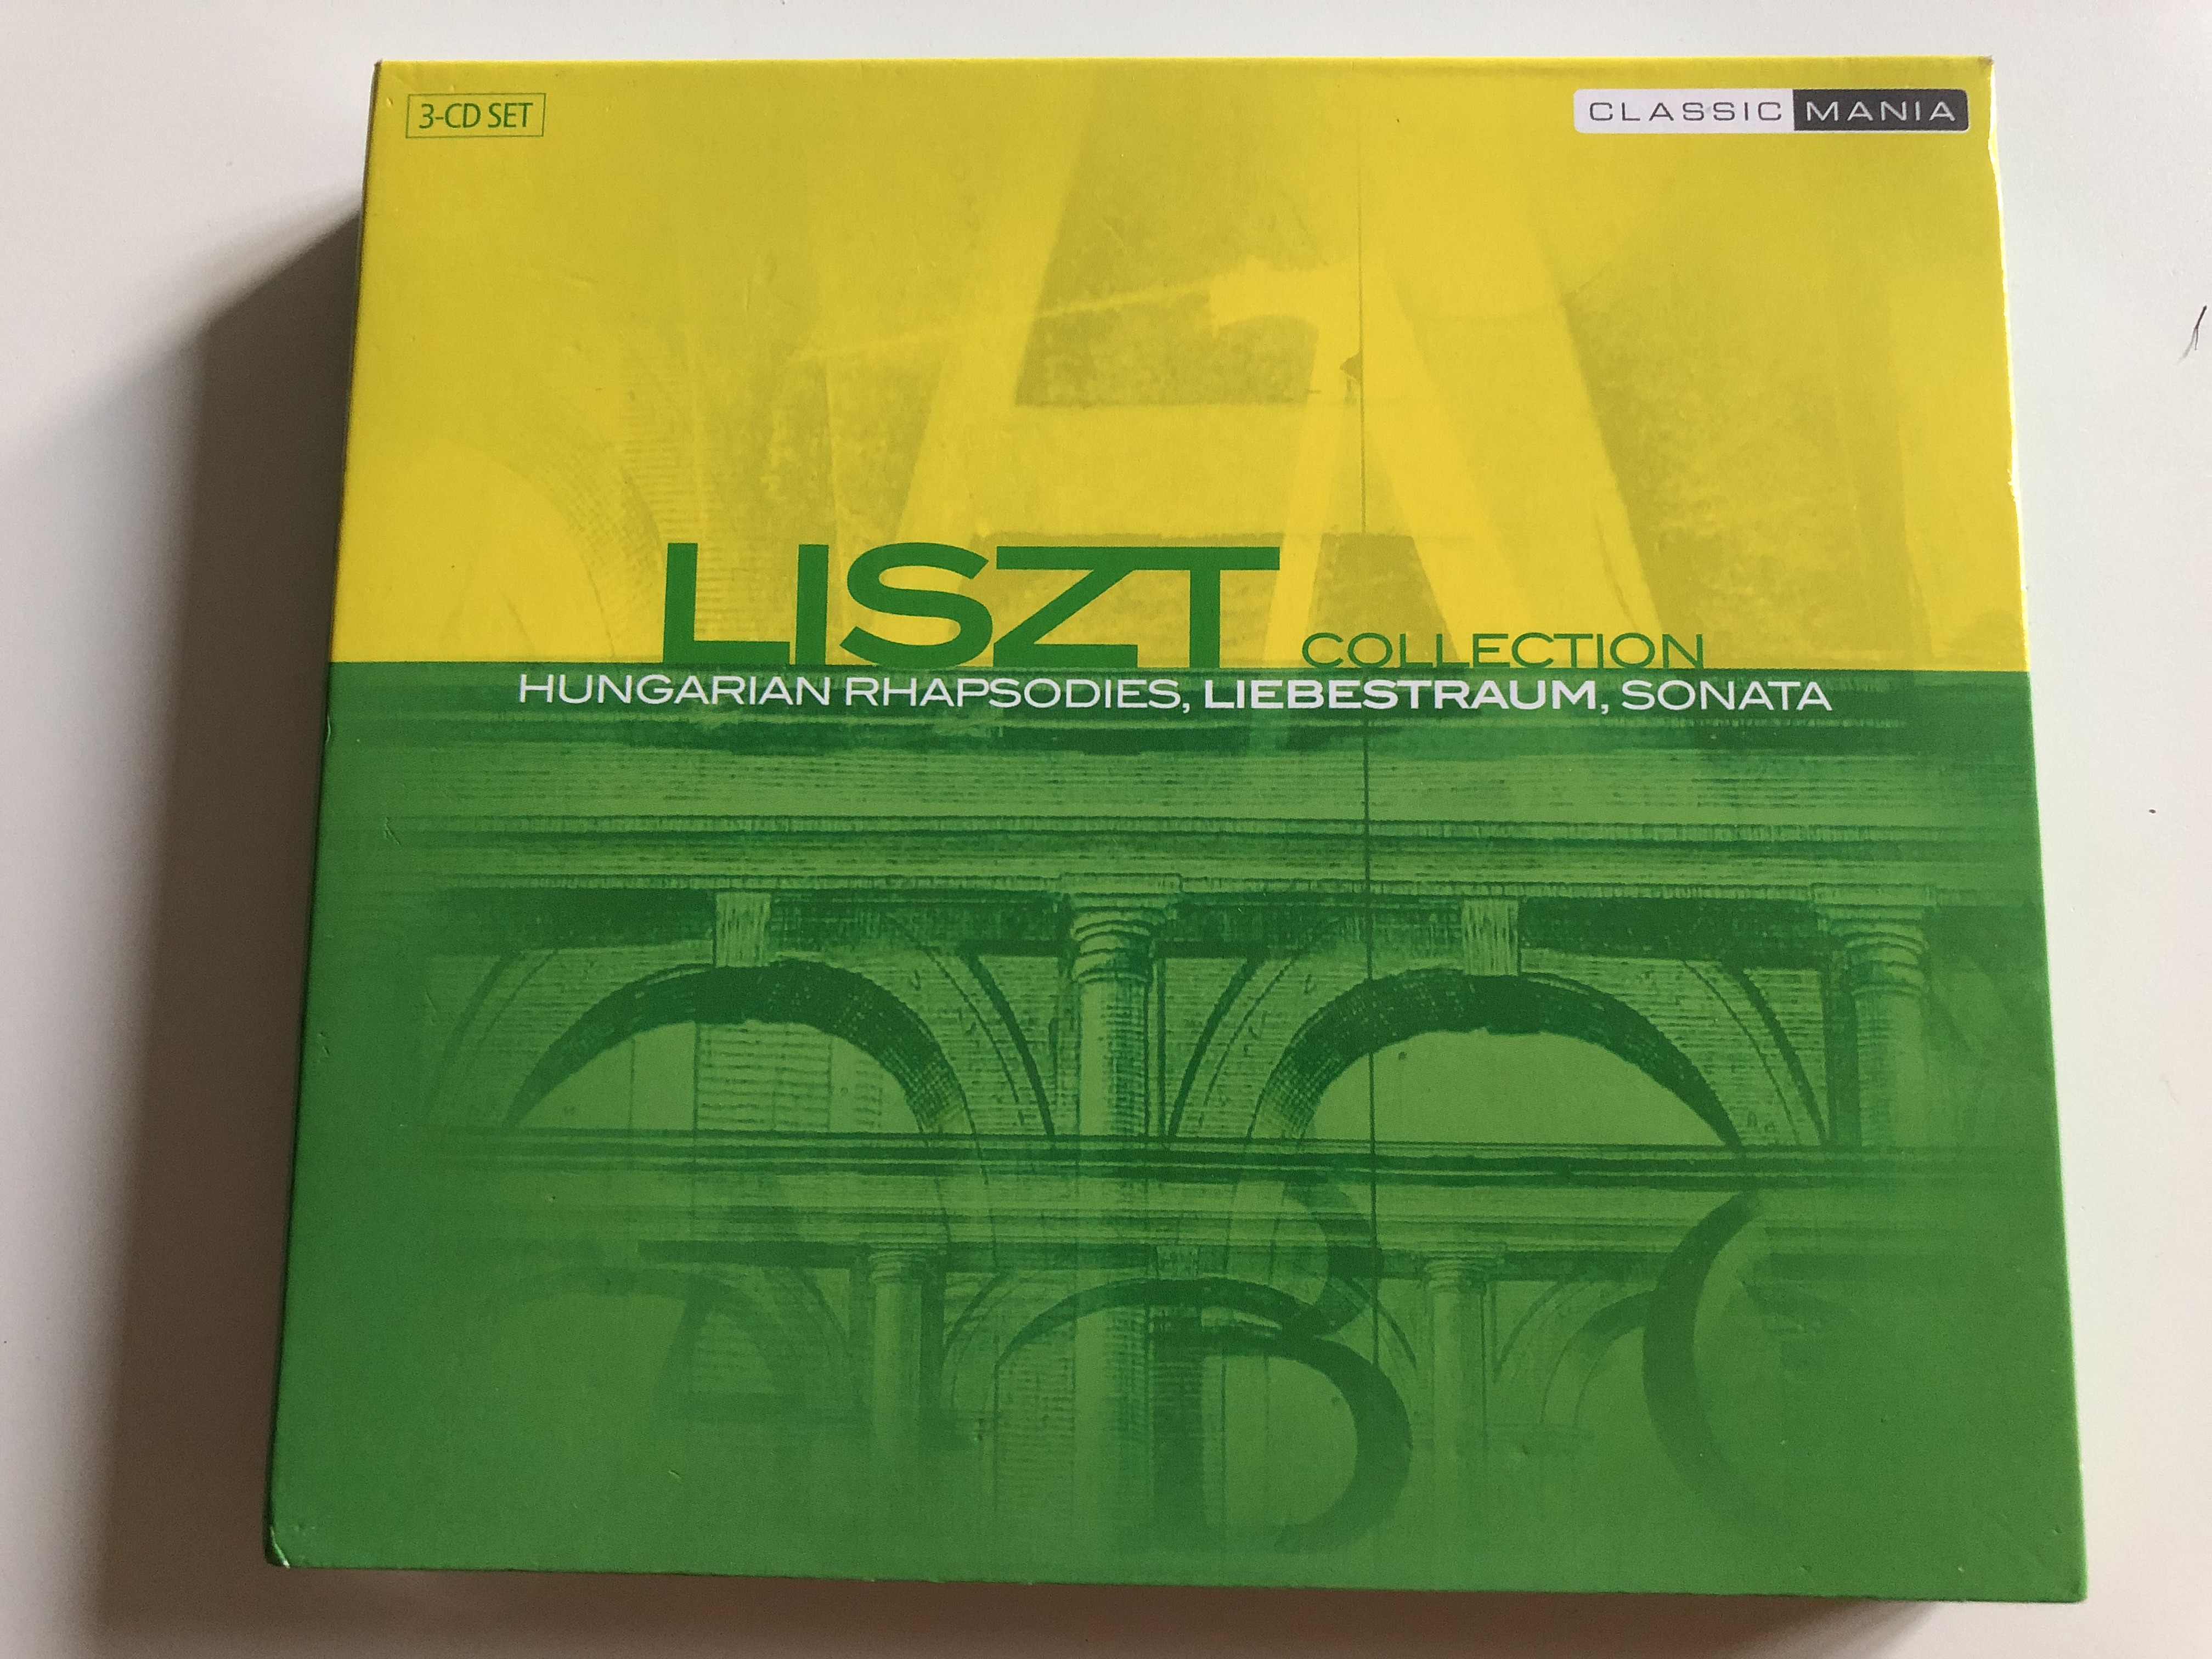 liszt-collection-hungarian-rhapsodies-liebestraum-sonata-artur-pizzaro-piano-kl-ra-w-rtz-piano-emil-gilels-piano-classic-mania-3-cd-set-2003-1-.jpg